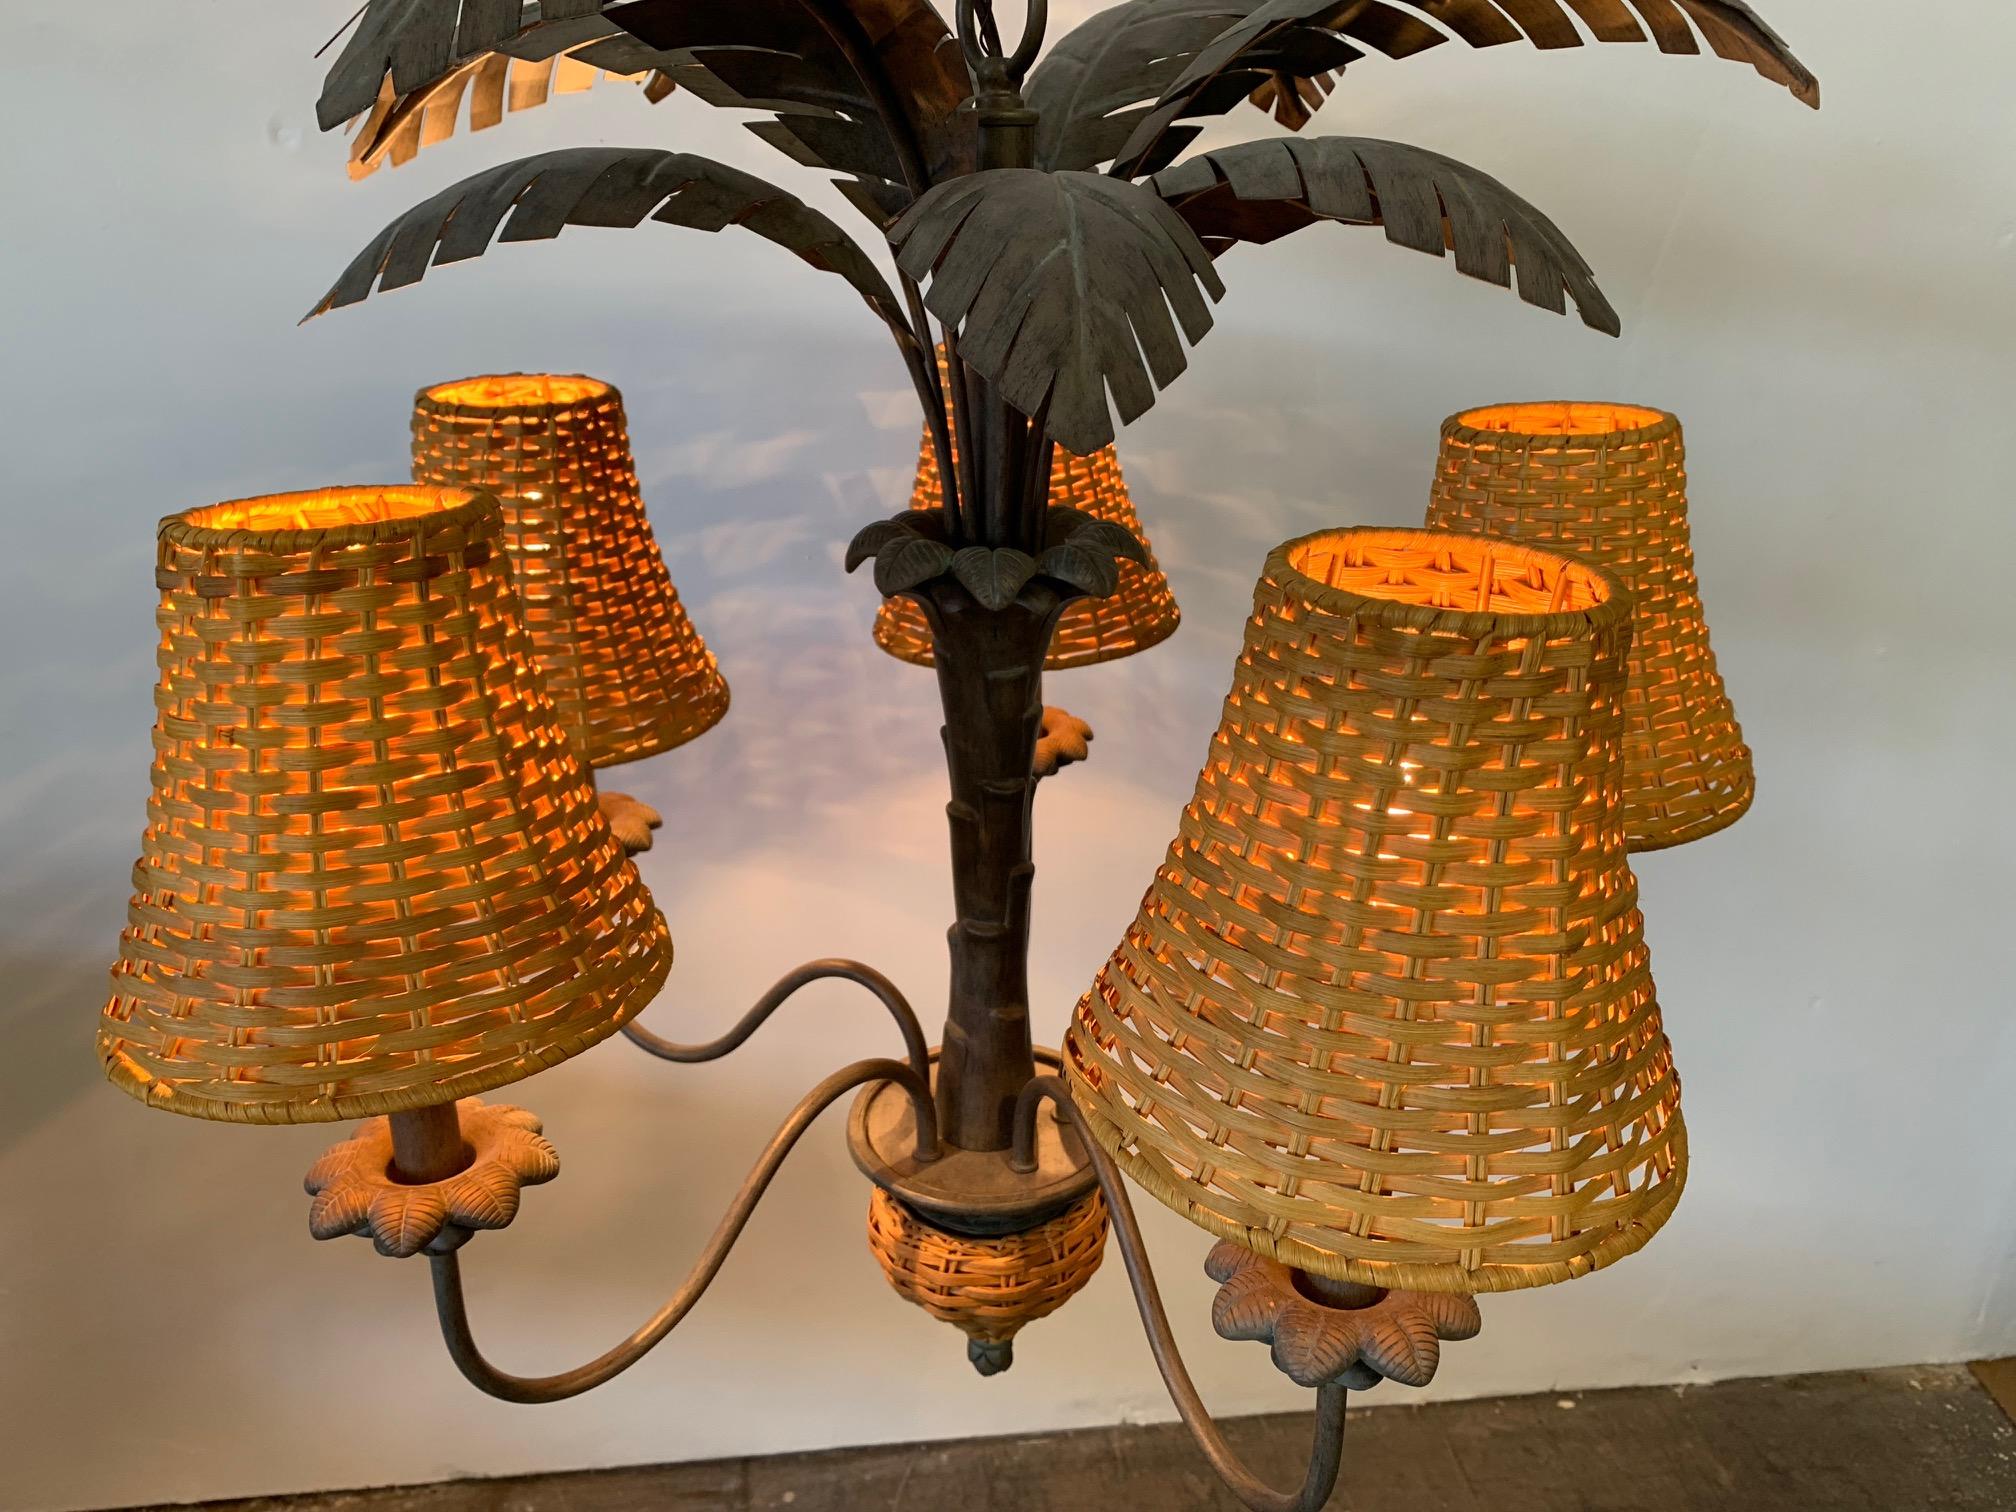 palm tree chandelier lighting